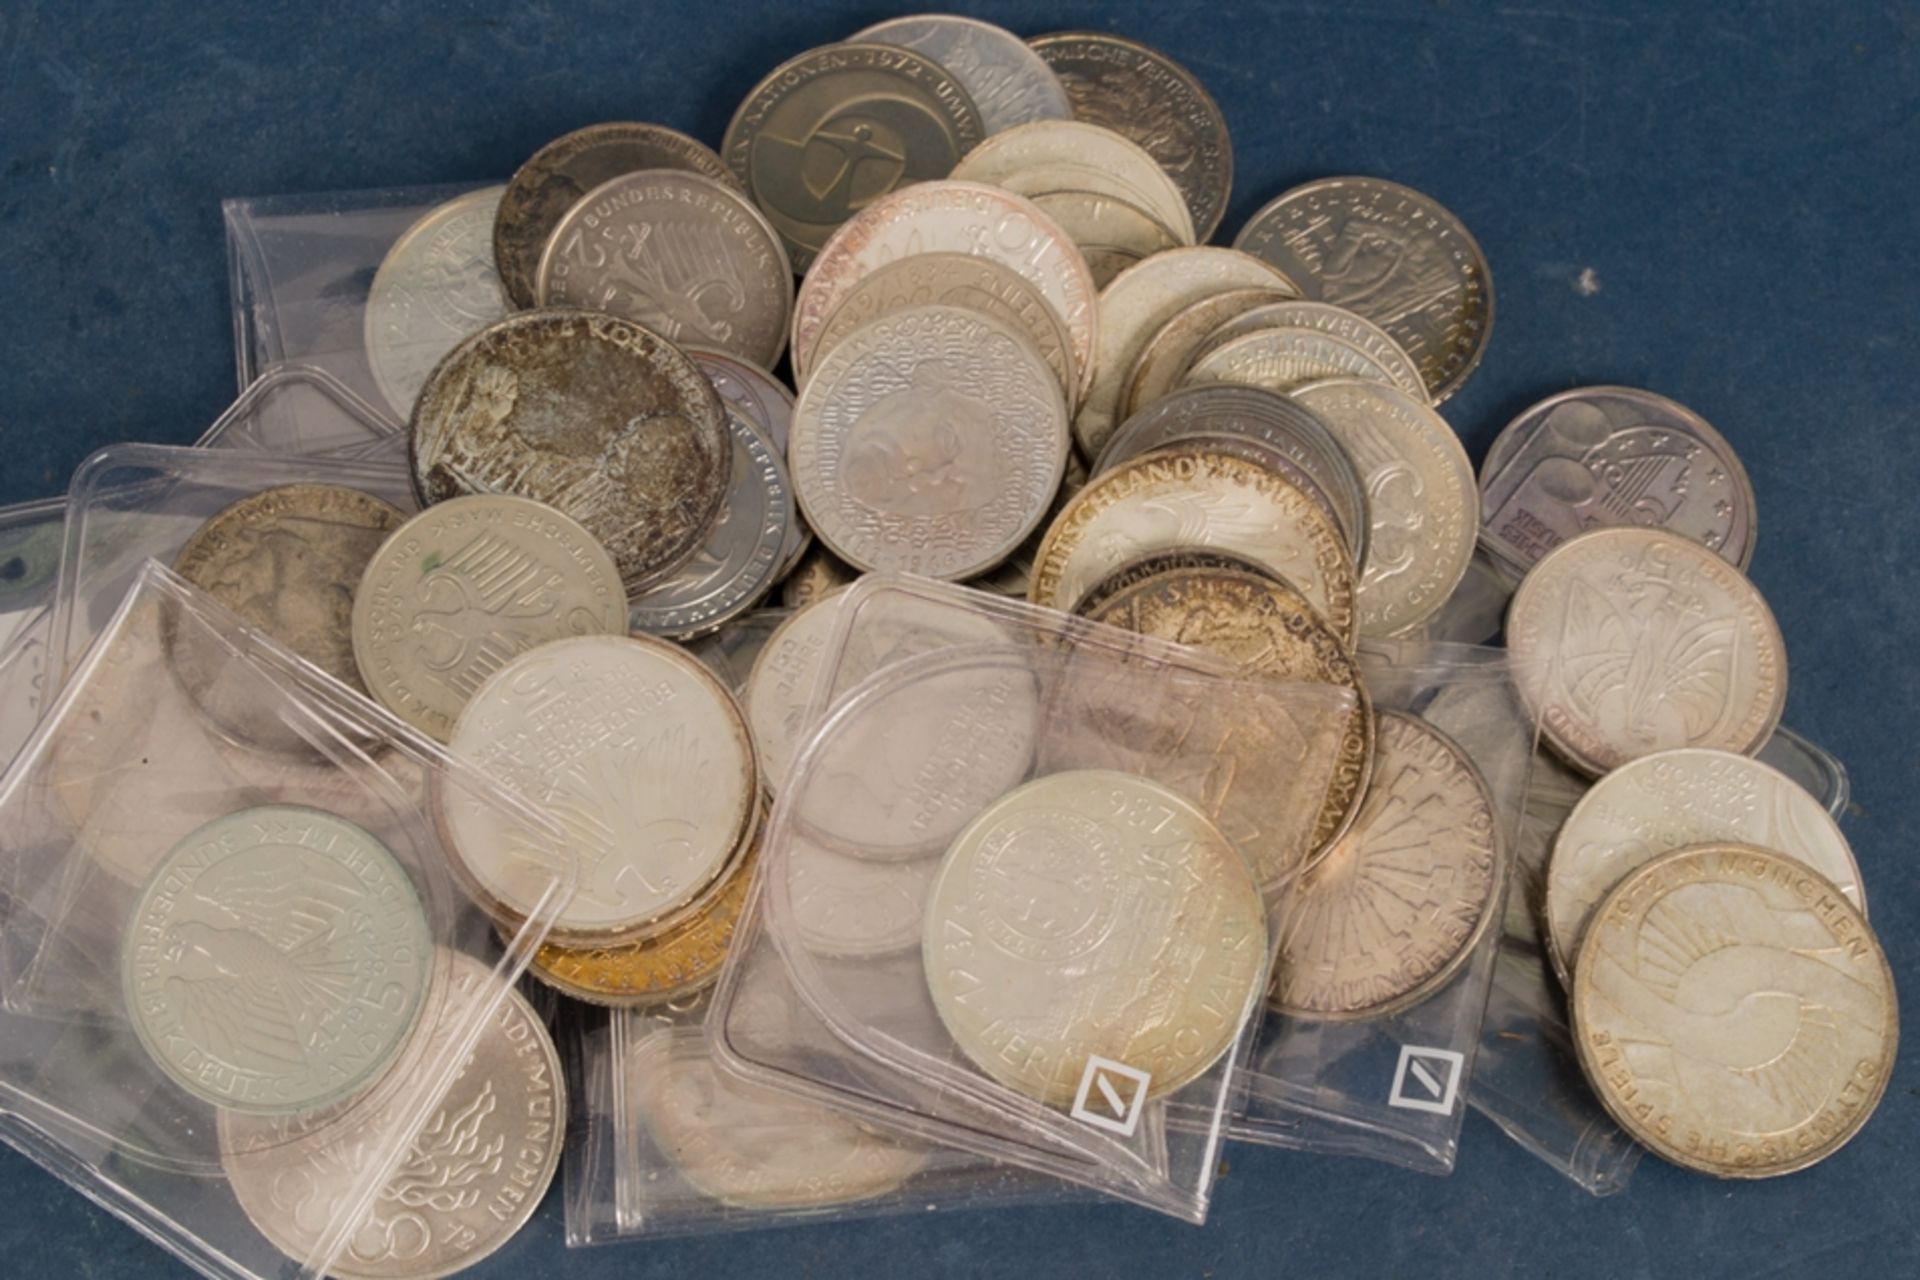 Ca. 56teilige Münzsammlung, überwiegend DM-Münzen: 1x 1DM, 5x 2DM, 26x 5DM, 19x